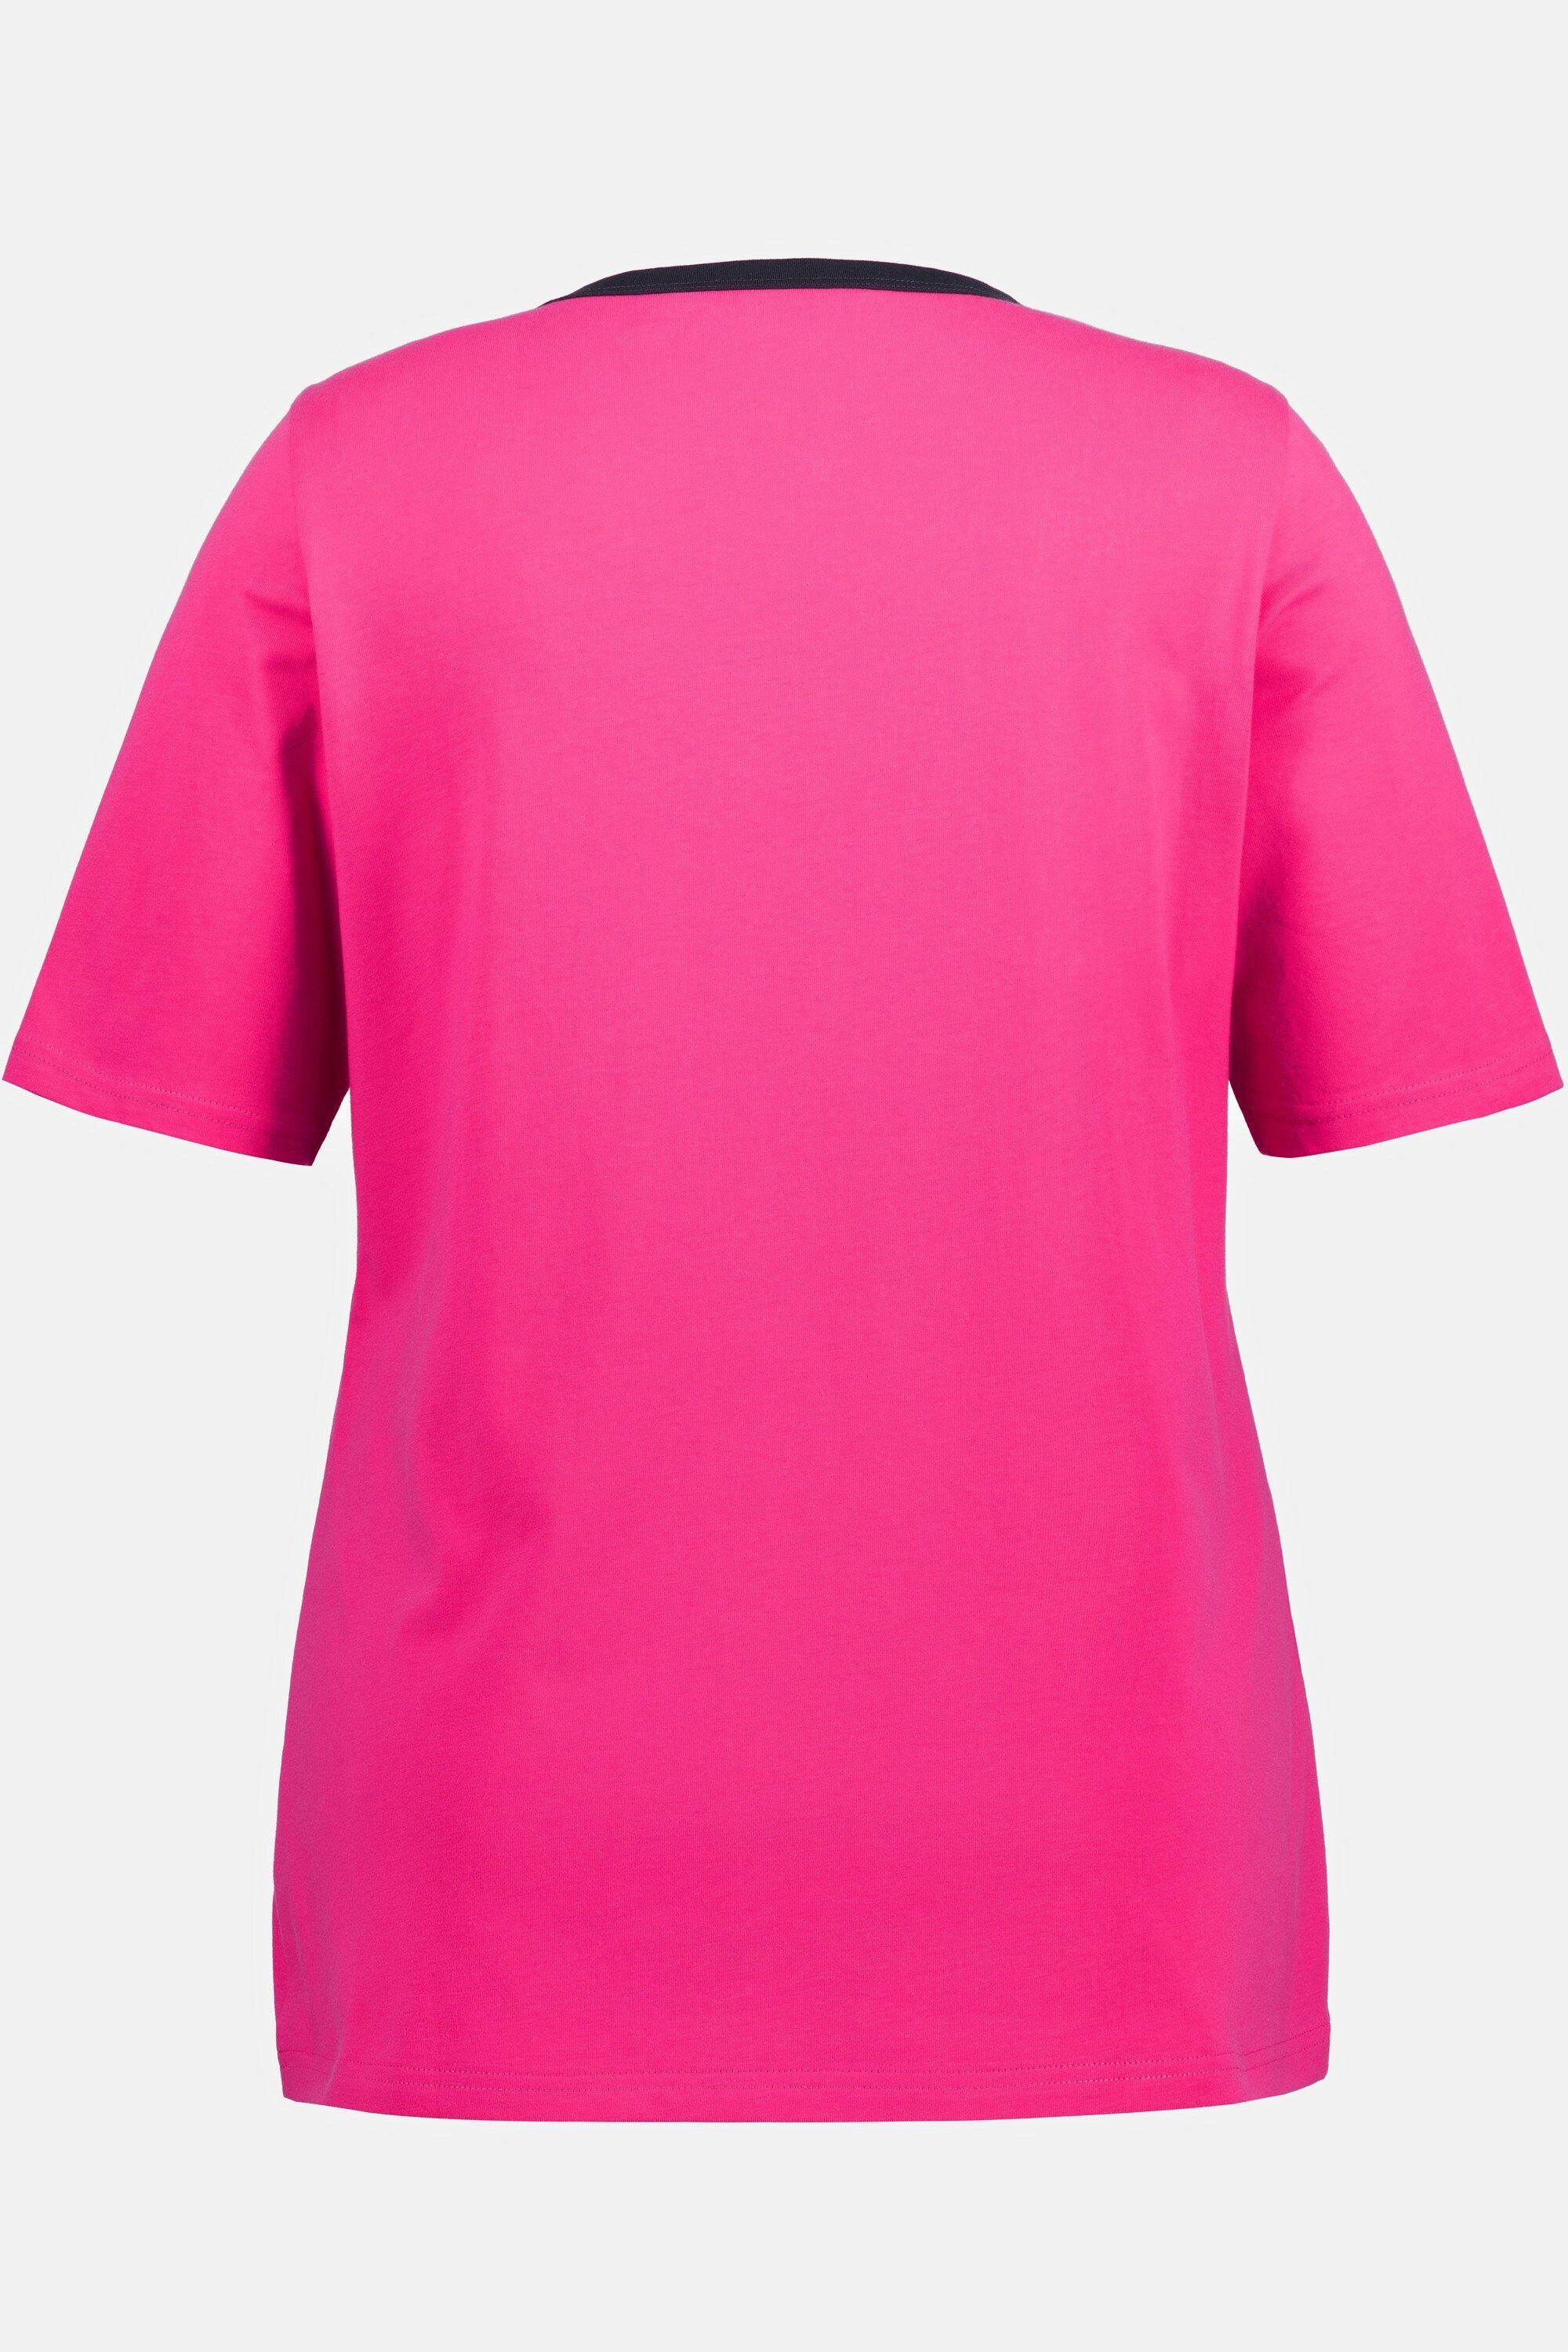 Popken Rundhalsshirt pink Carree-Ausschnitt Ulla T-Shirt Halbarm Slim Zierpaspel